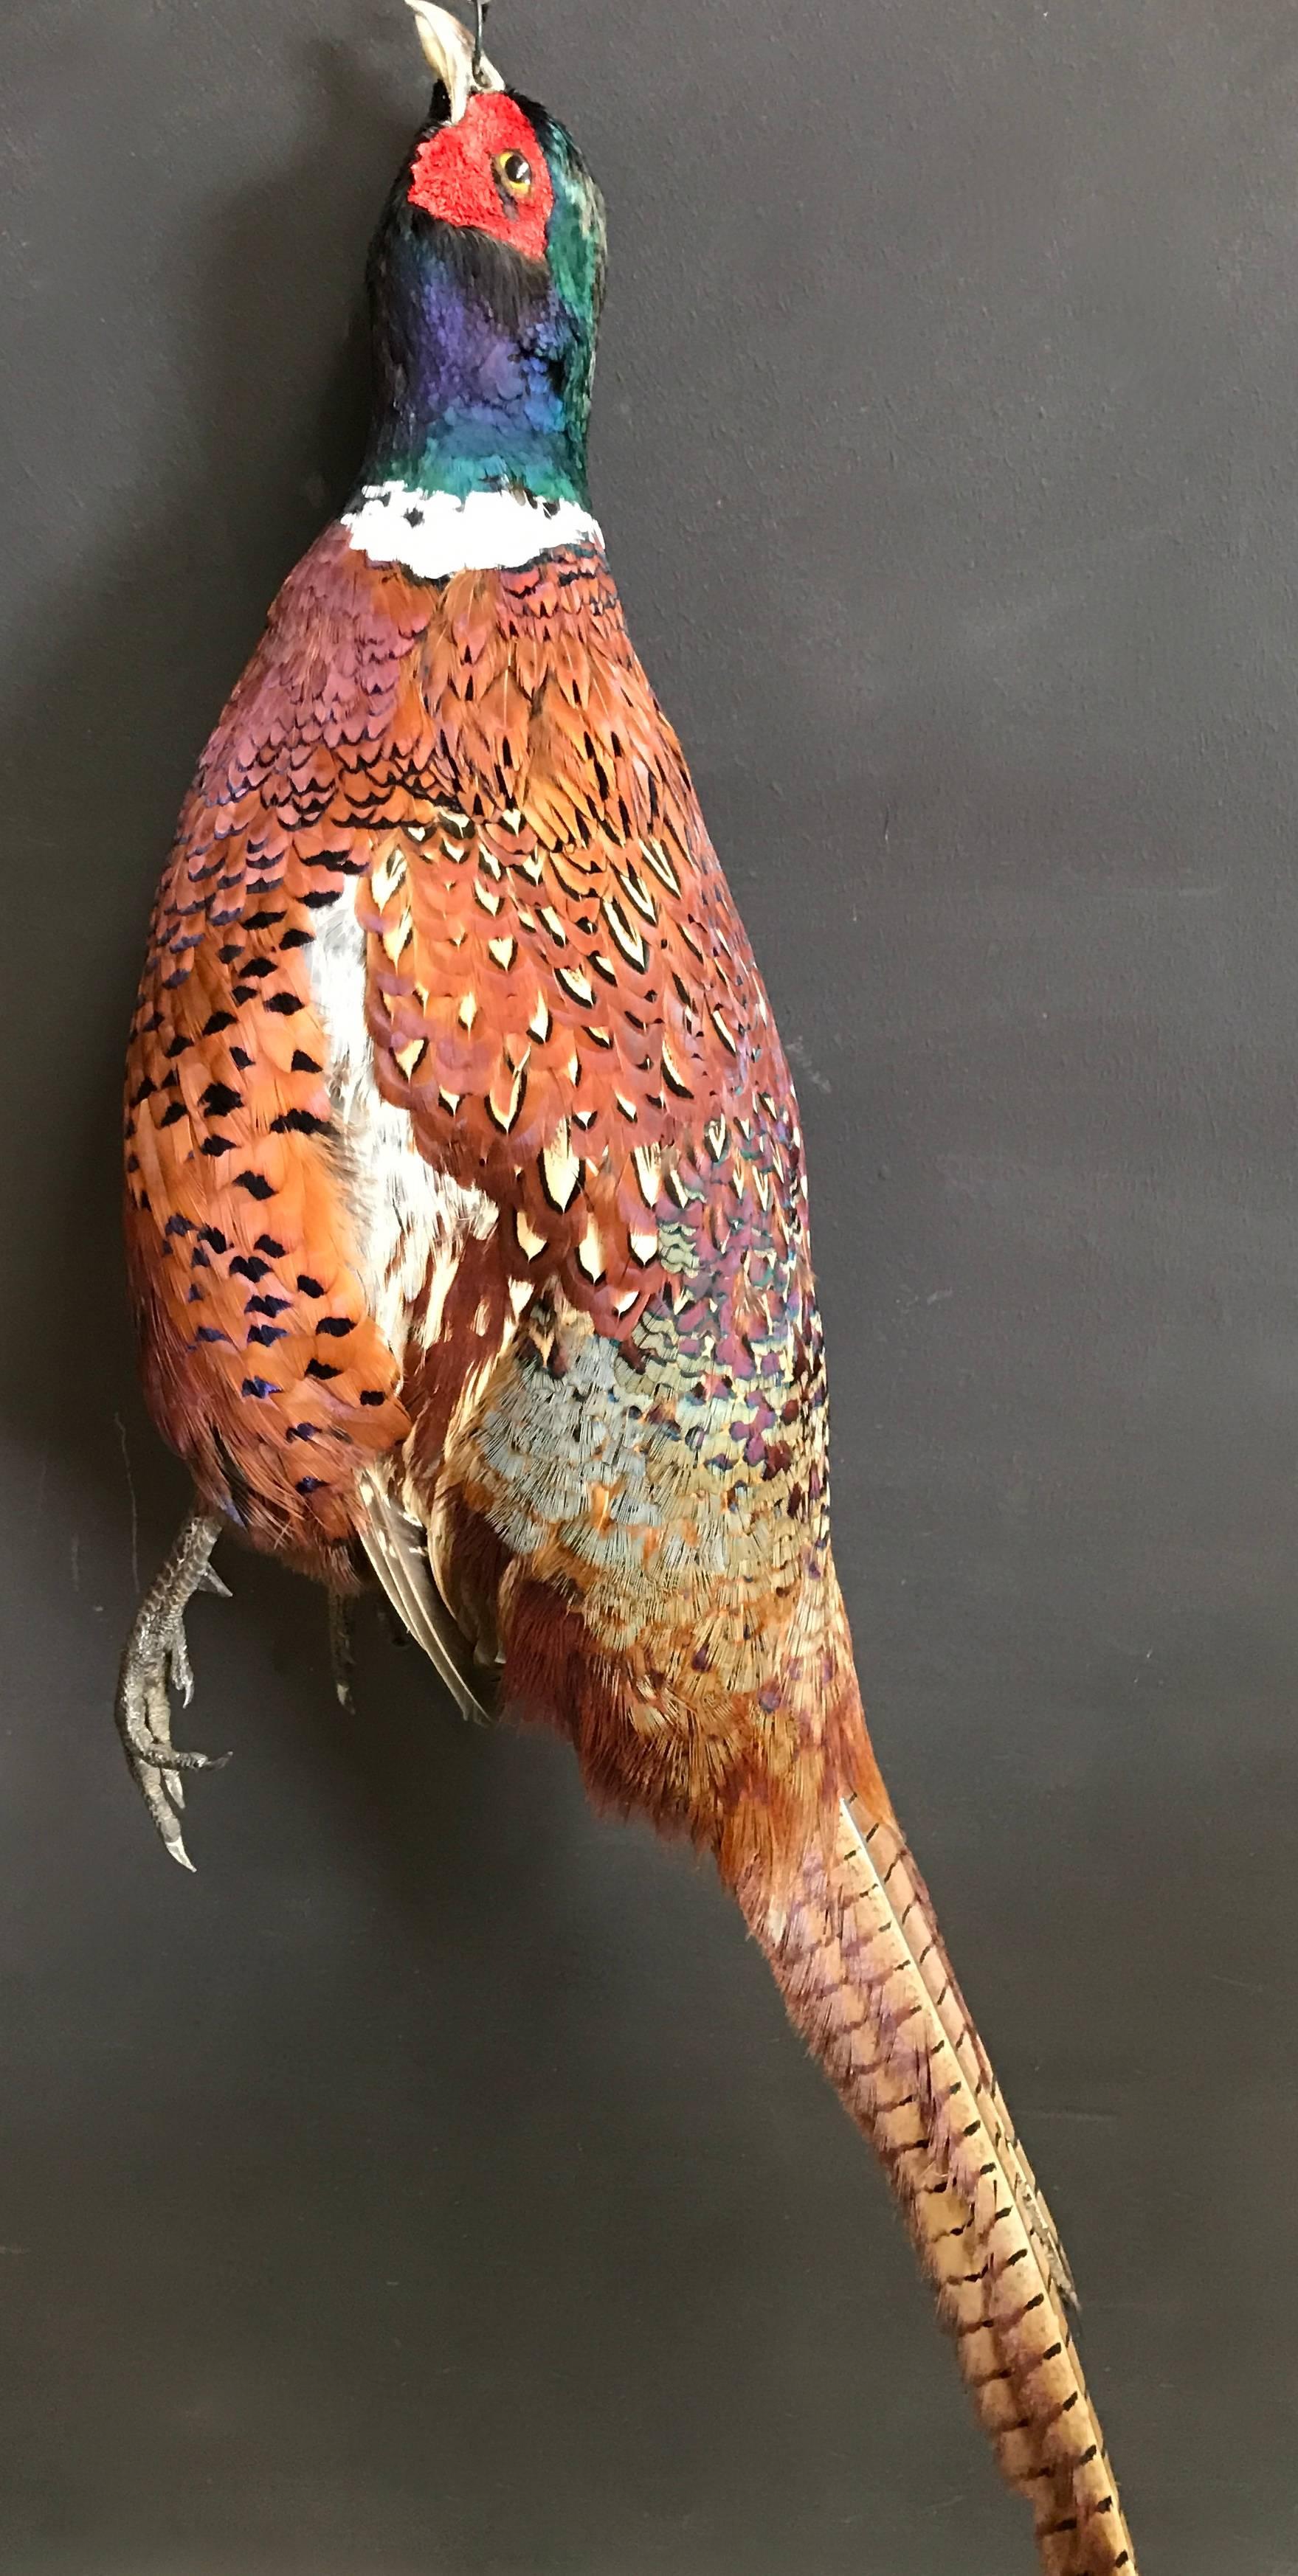 Decorative hanging pheasant.
Fresh taxidermy.